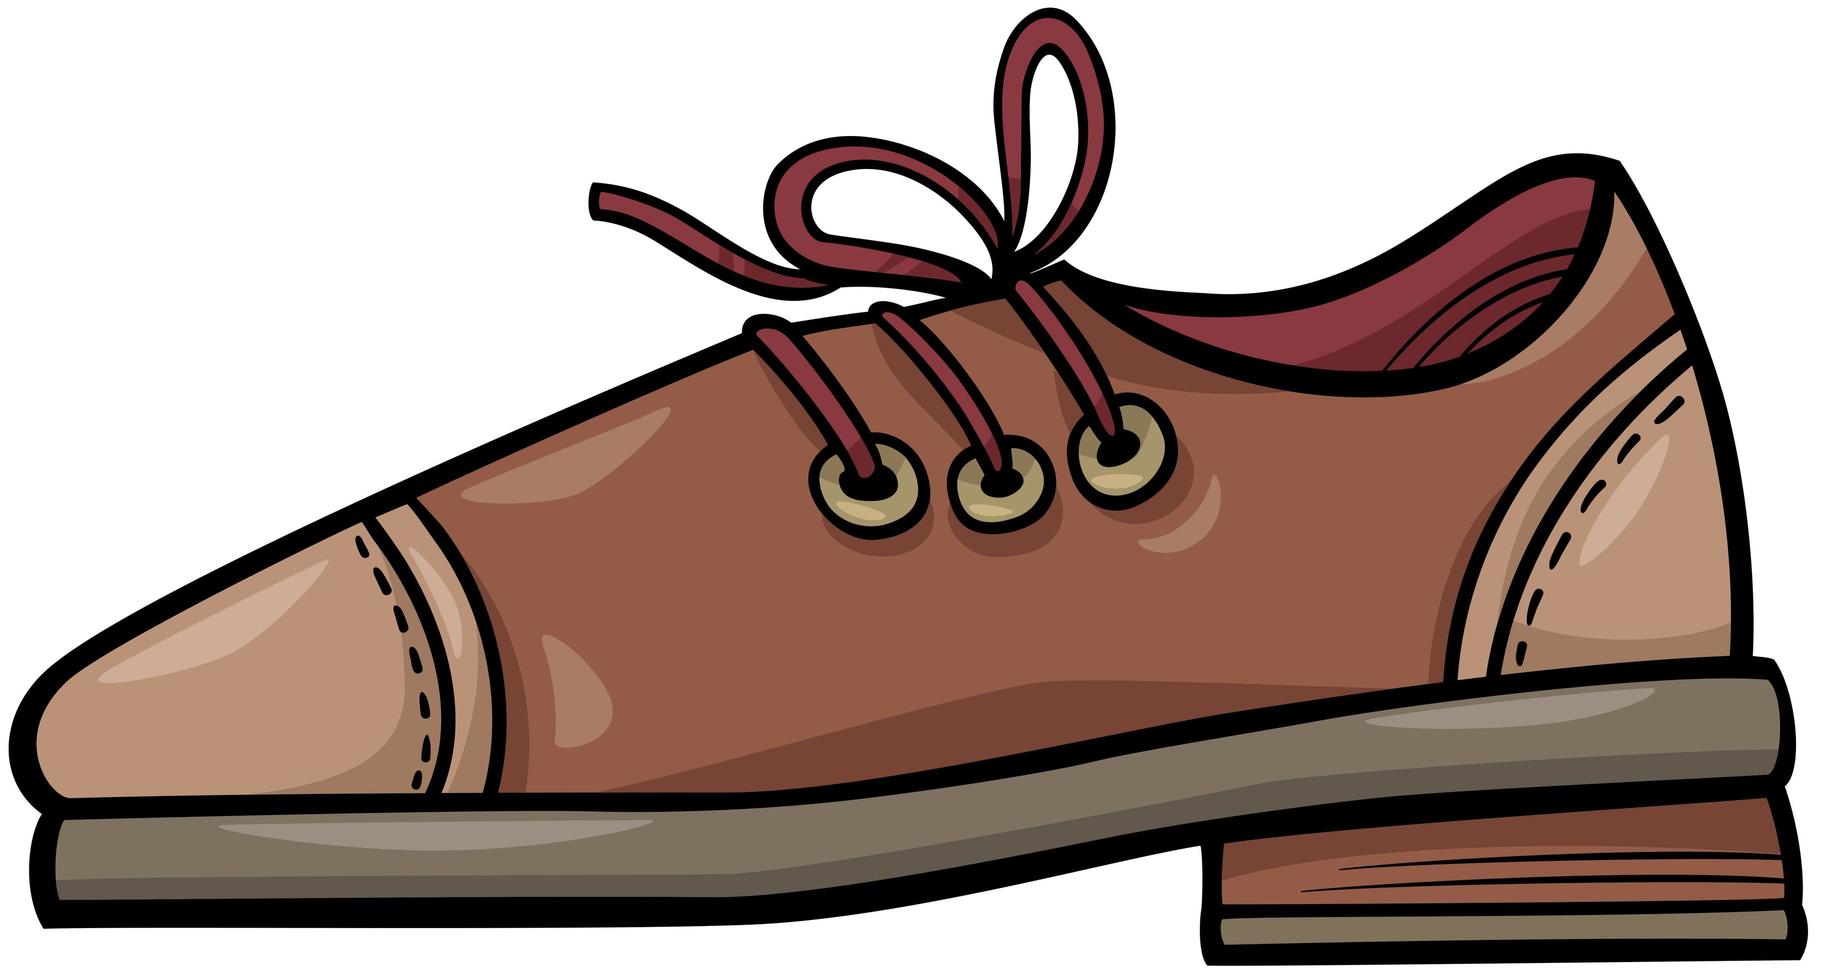 leather shoe object cartoon clip art vector